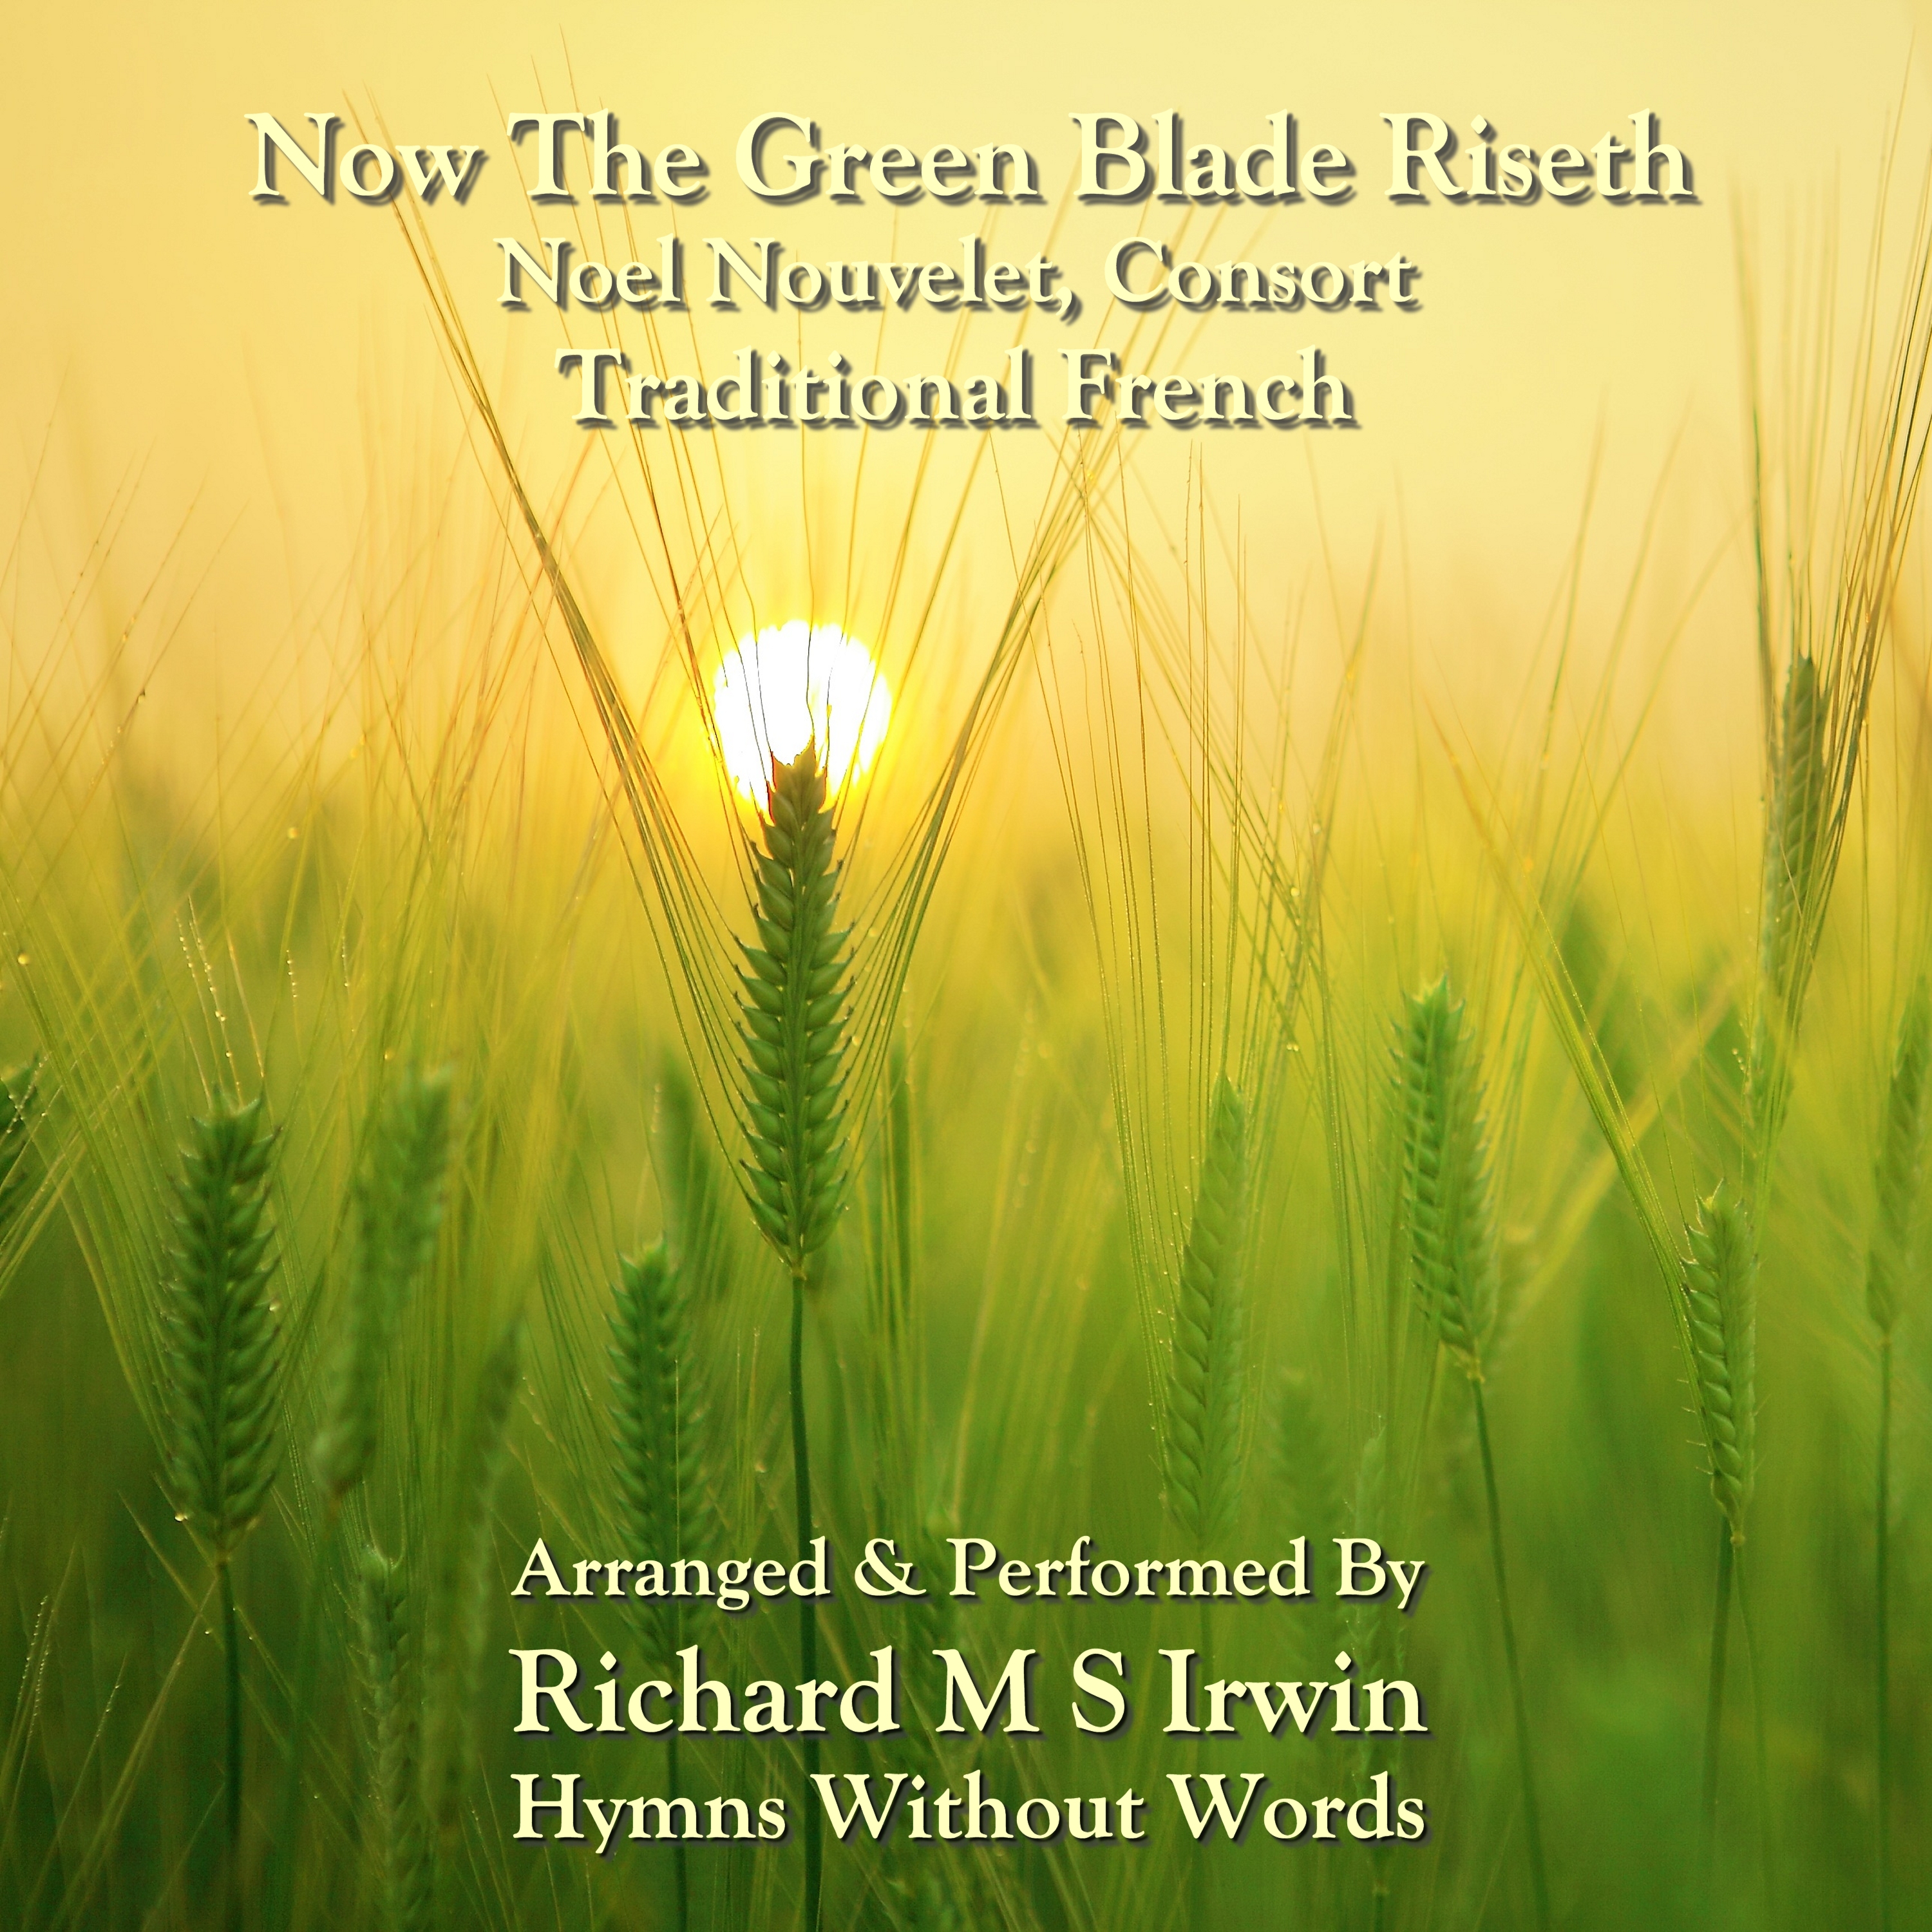 Now The Green Blade Riseth (Noel Nouvelet, Consort, 4 Verses)